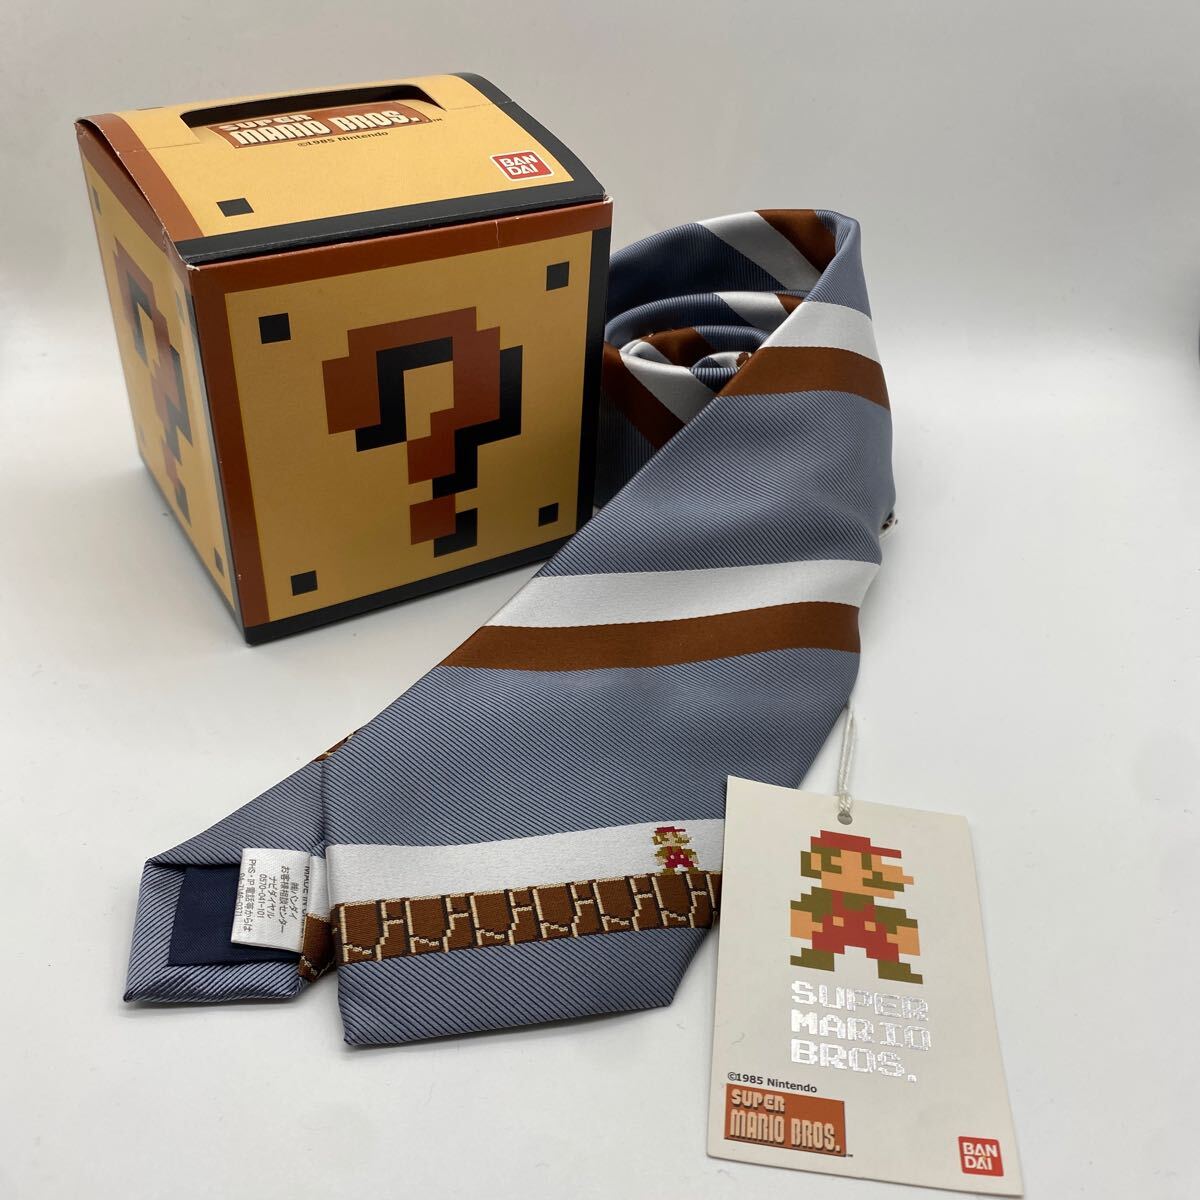  не использовался товар Super Mario Brothers галстук super mario bros. retro игра nintendo nintendo Famicom Nintendo super Mario 